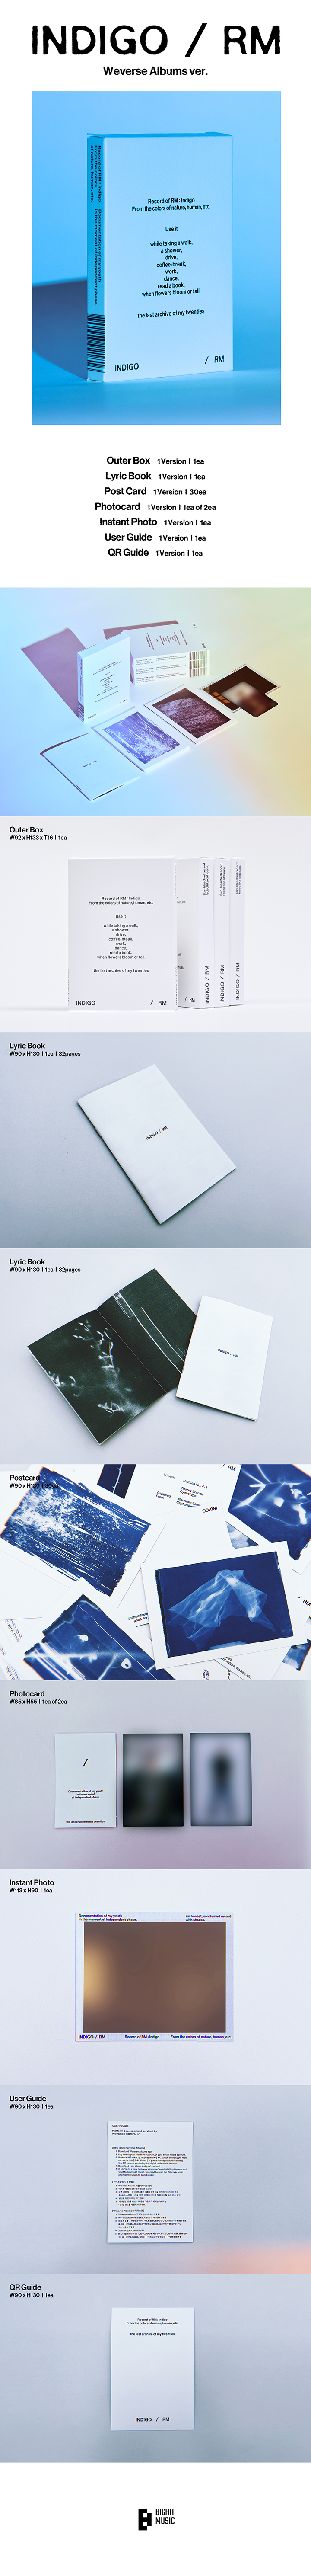 BTS RM - The 1st Full Album 'Indigo' Postcard Edition (Weverse Albums Ver.)